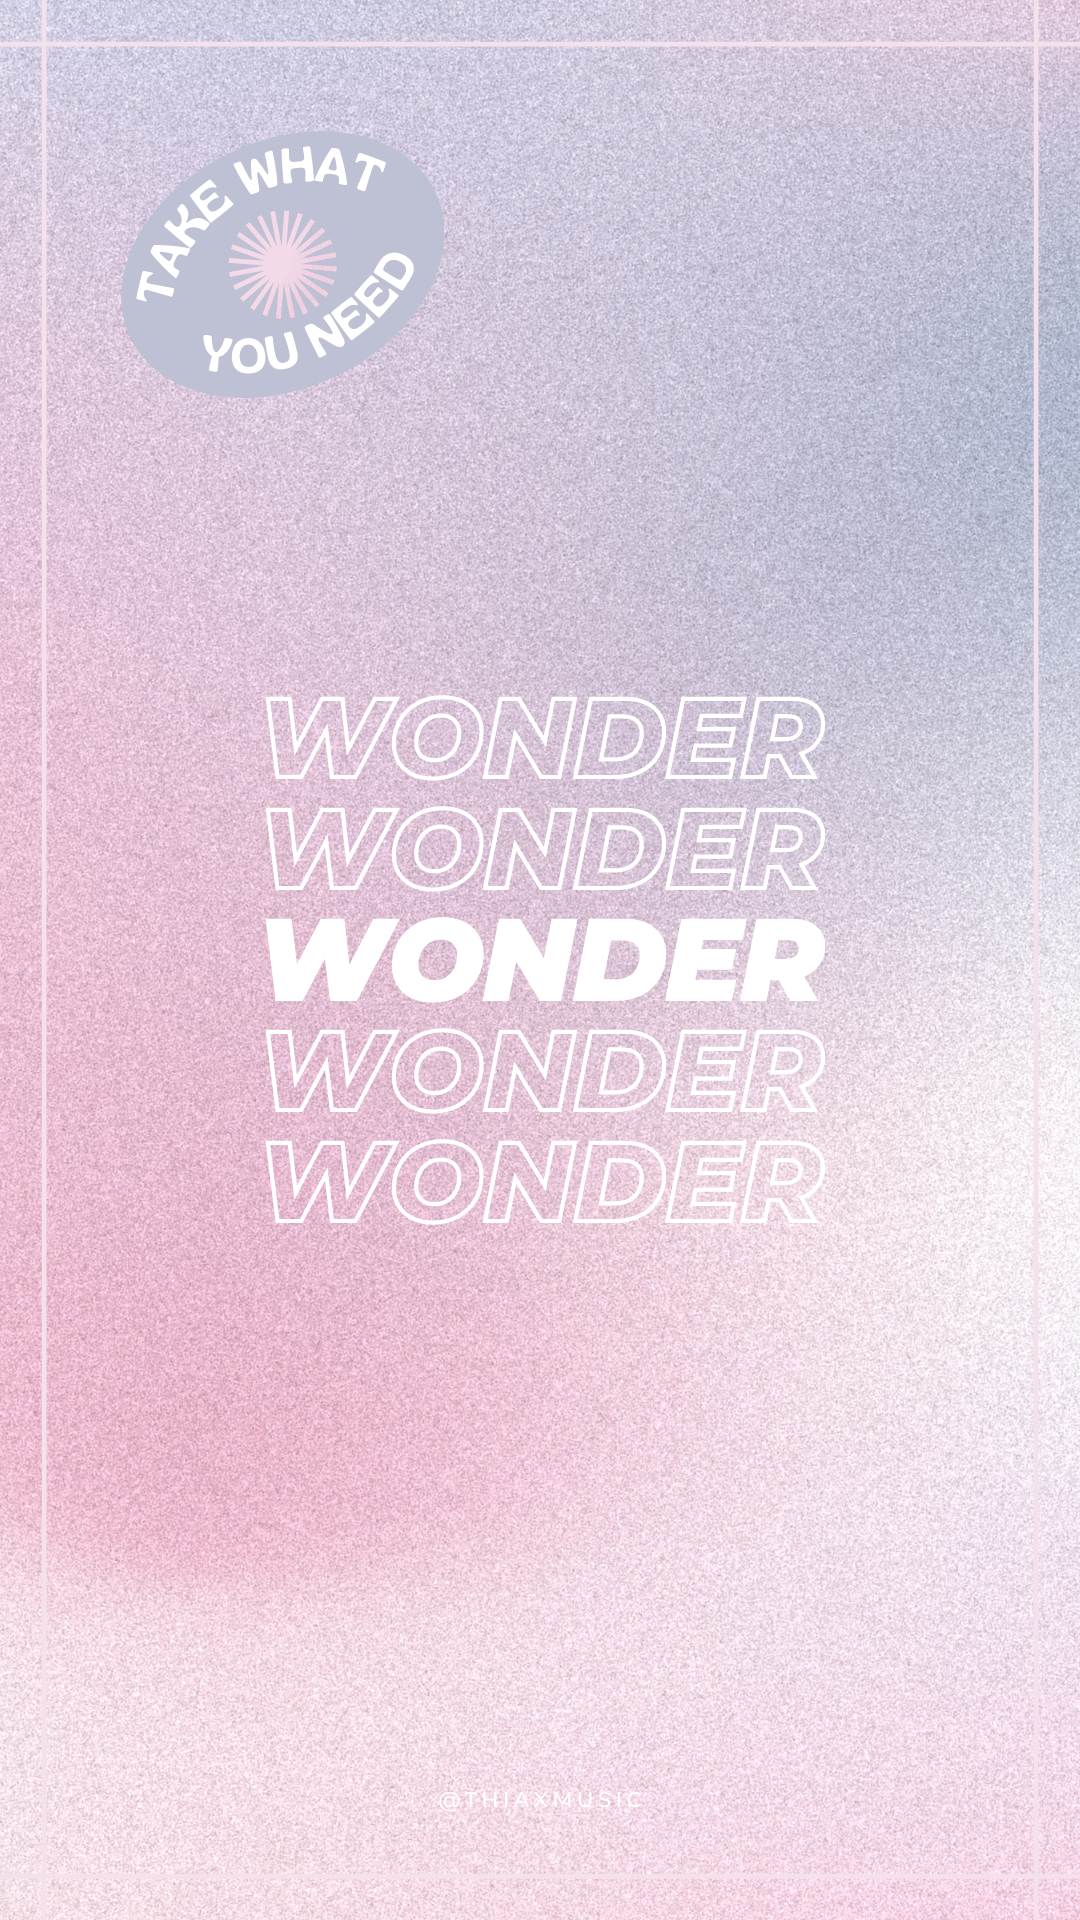 16 Wonder.png